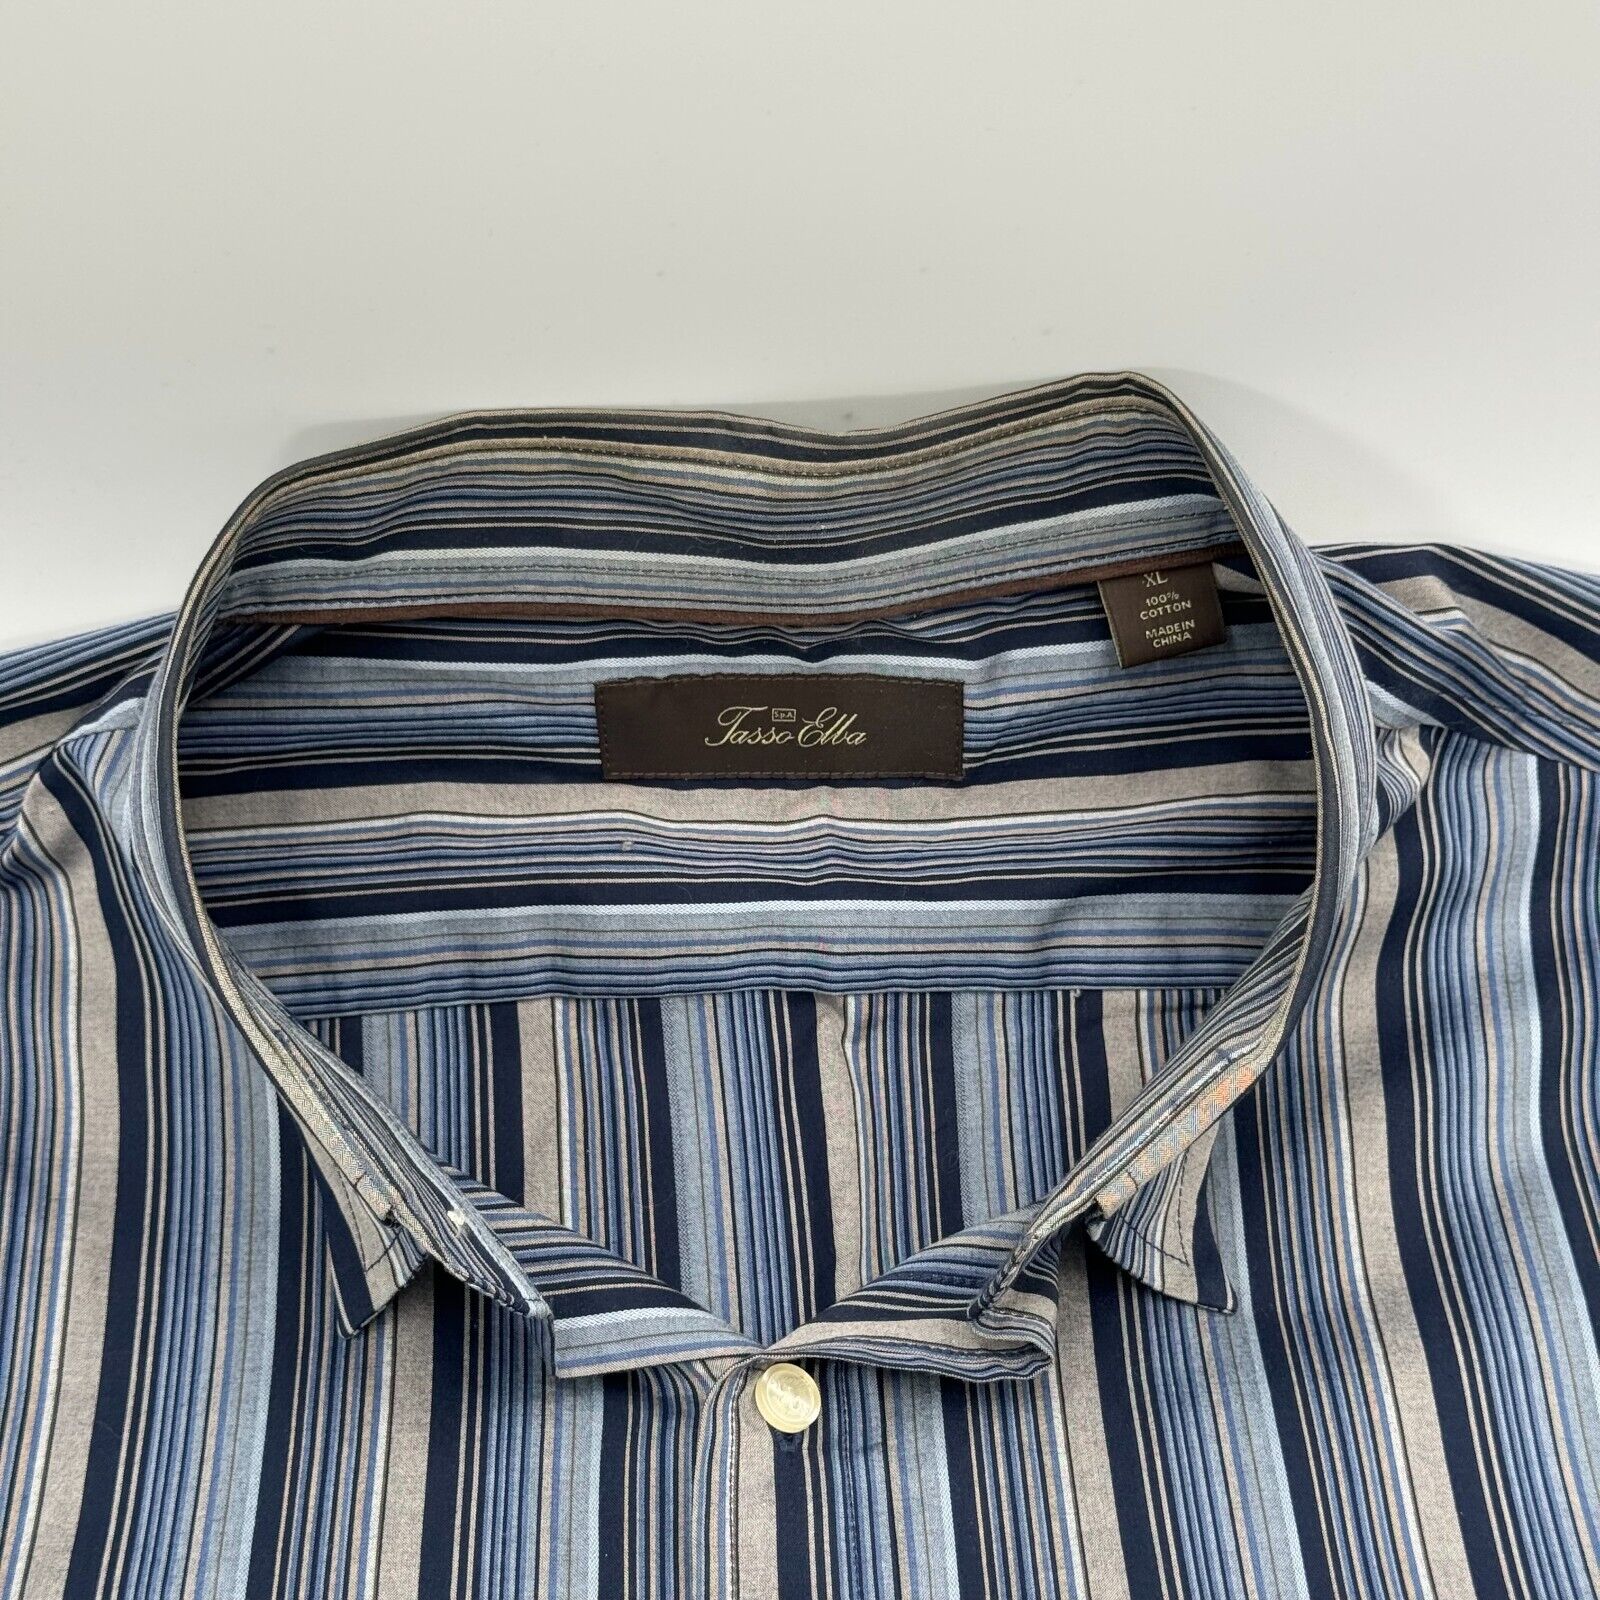 Tasso Elba Spa Luxury Linen Long Sleeve Button Up Shirt Blue Tan Stripes Mens XL